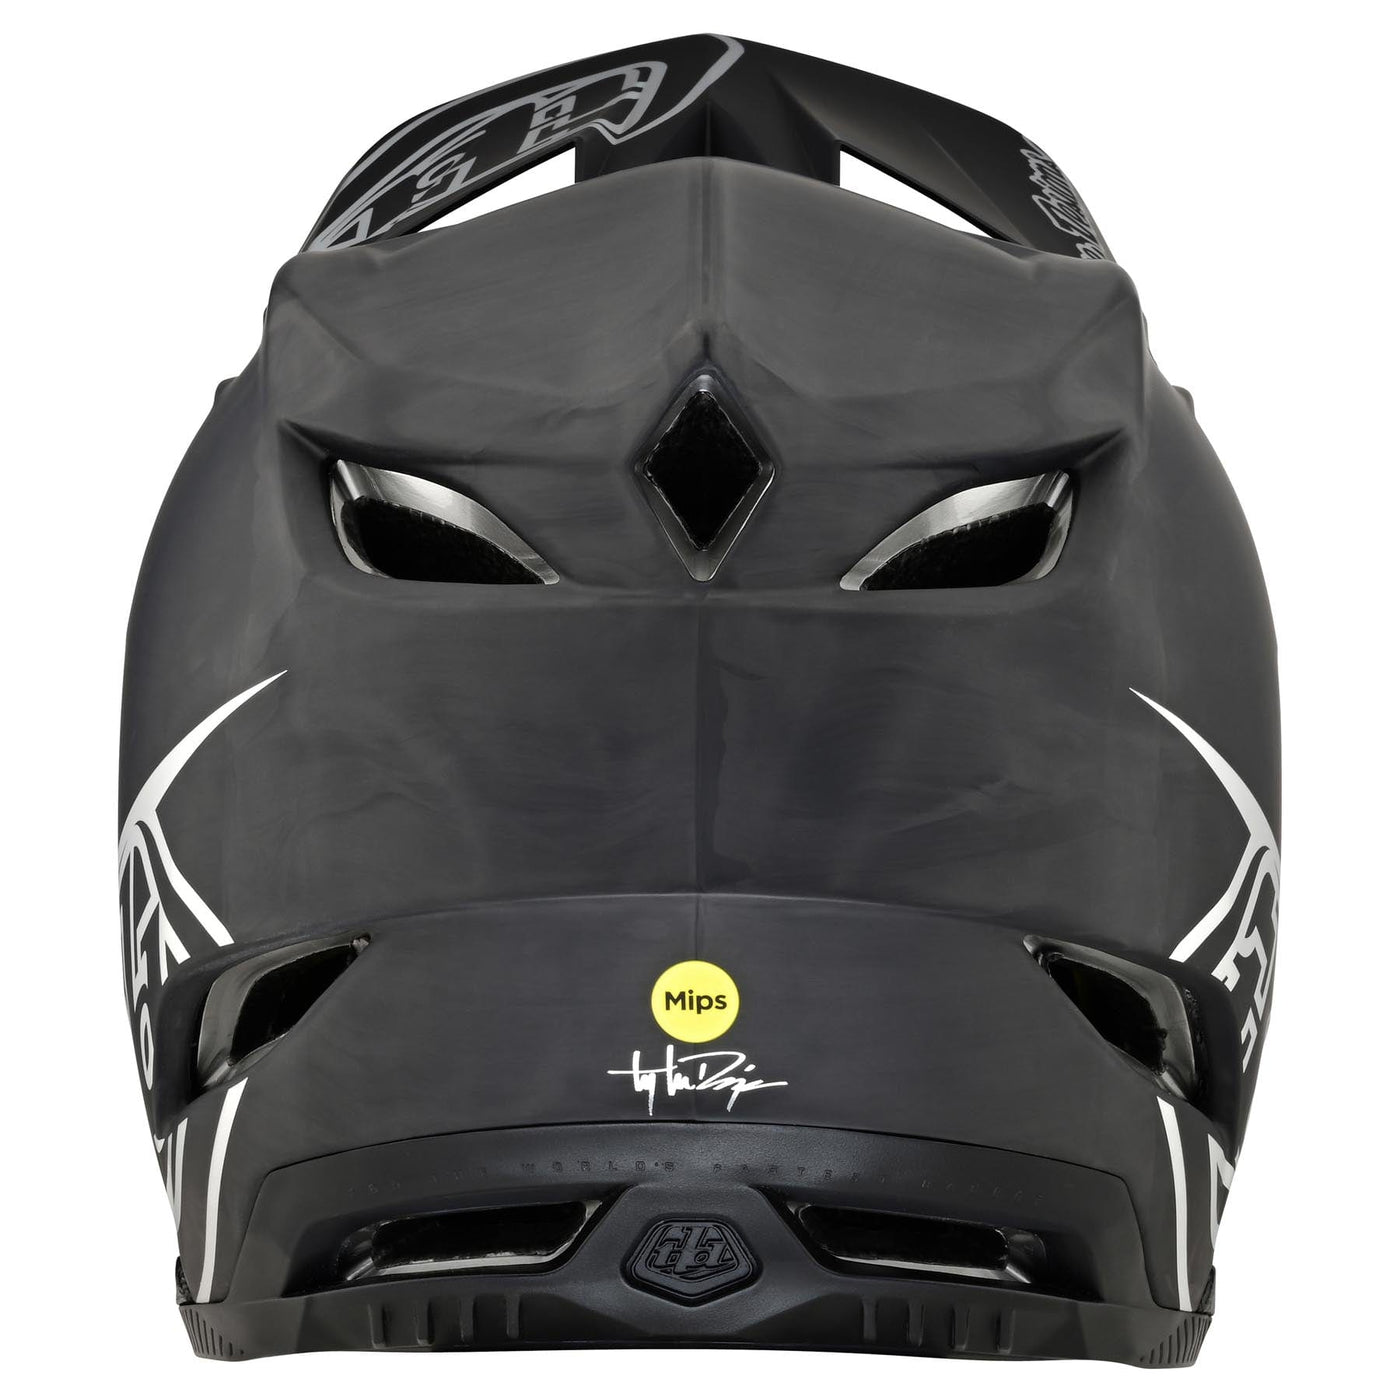 Troy Lee Designs downhill helmet - Black/Silver